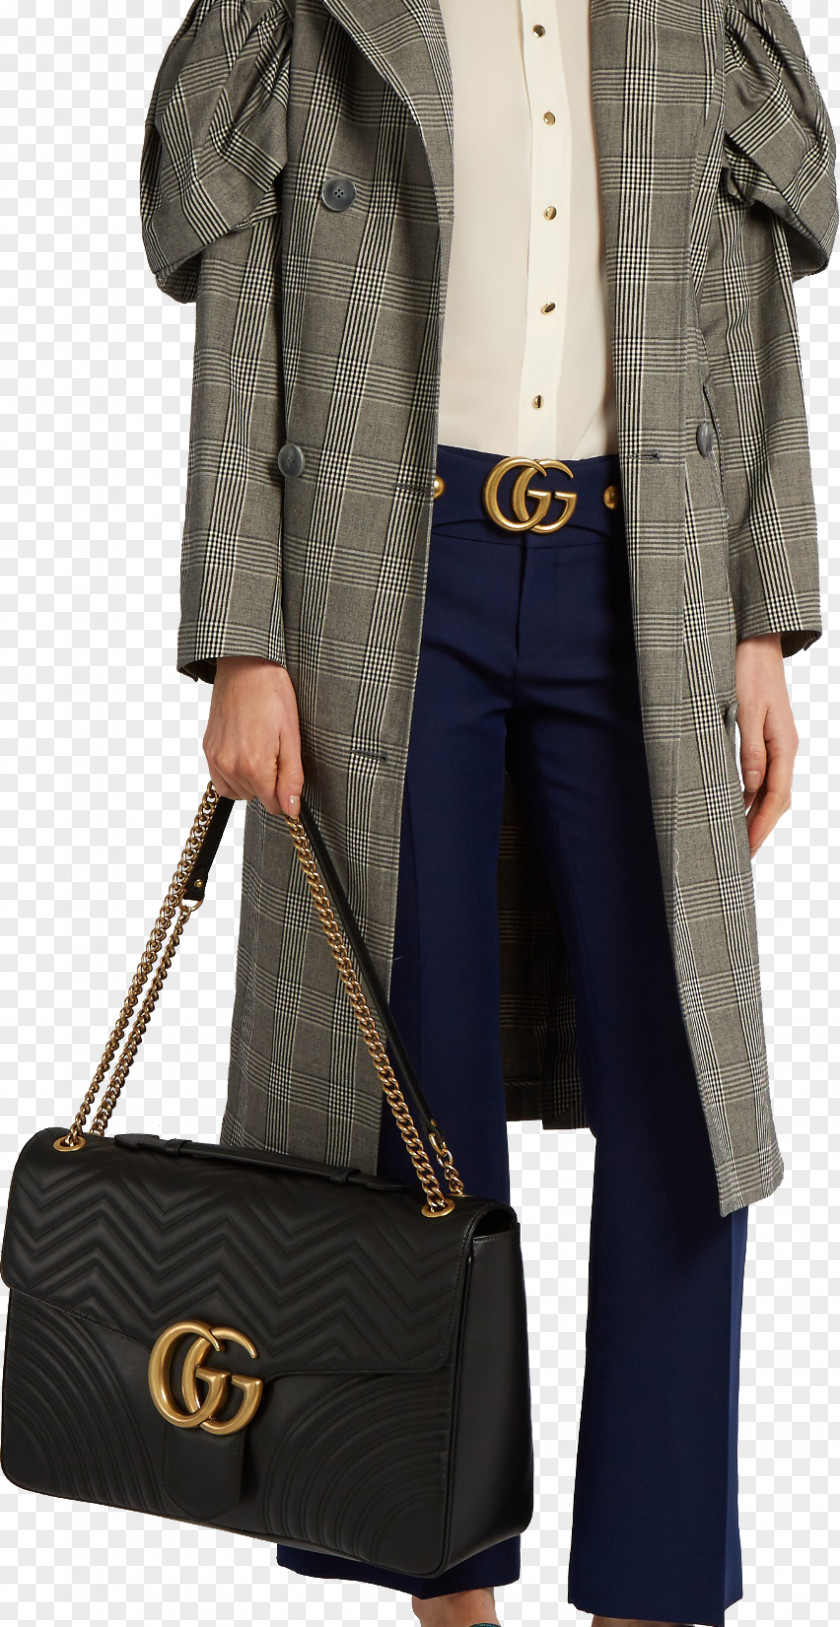 Chanel Handbag Yves Saint Laurent Gucci PNG